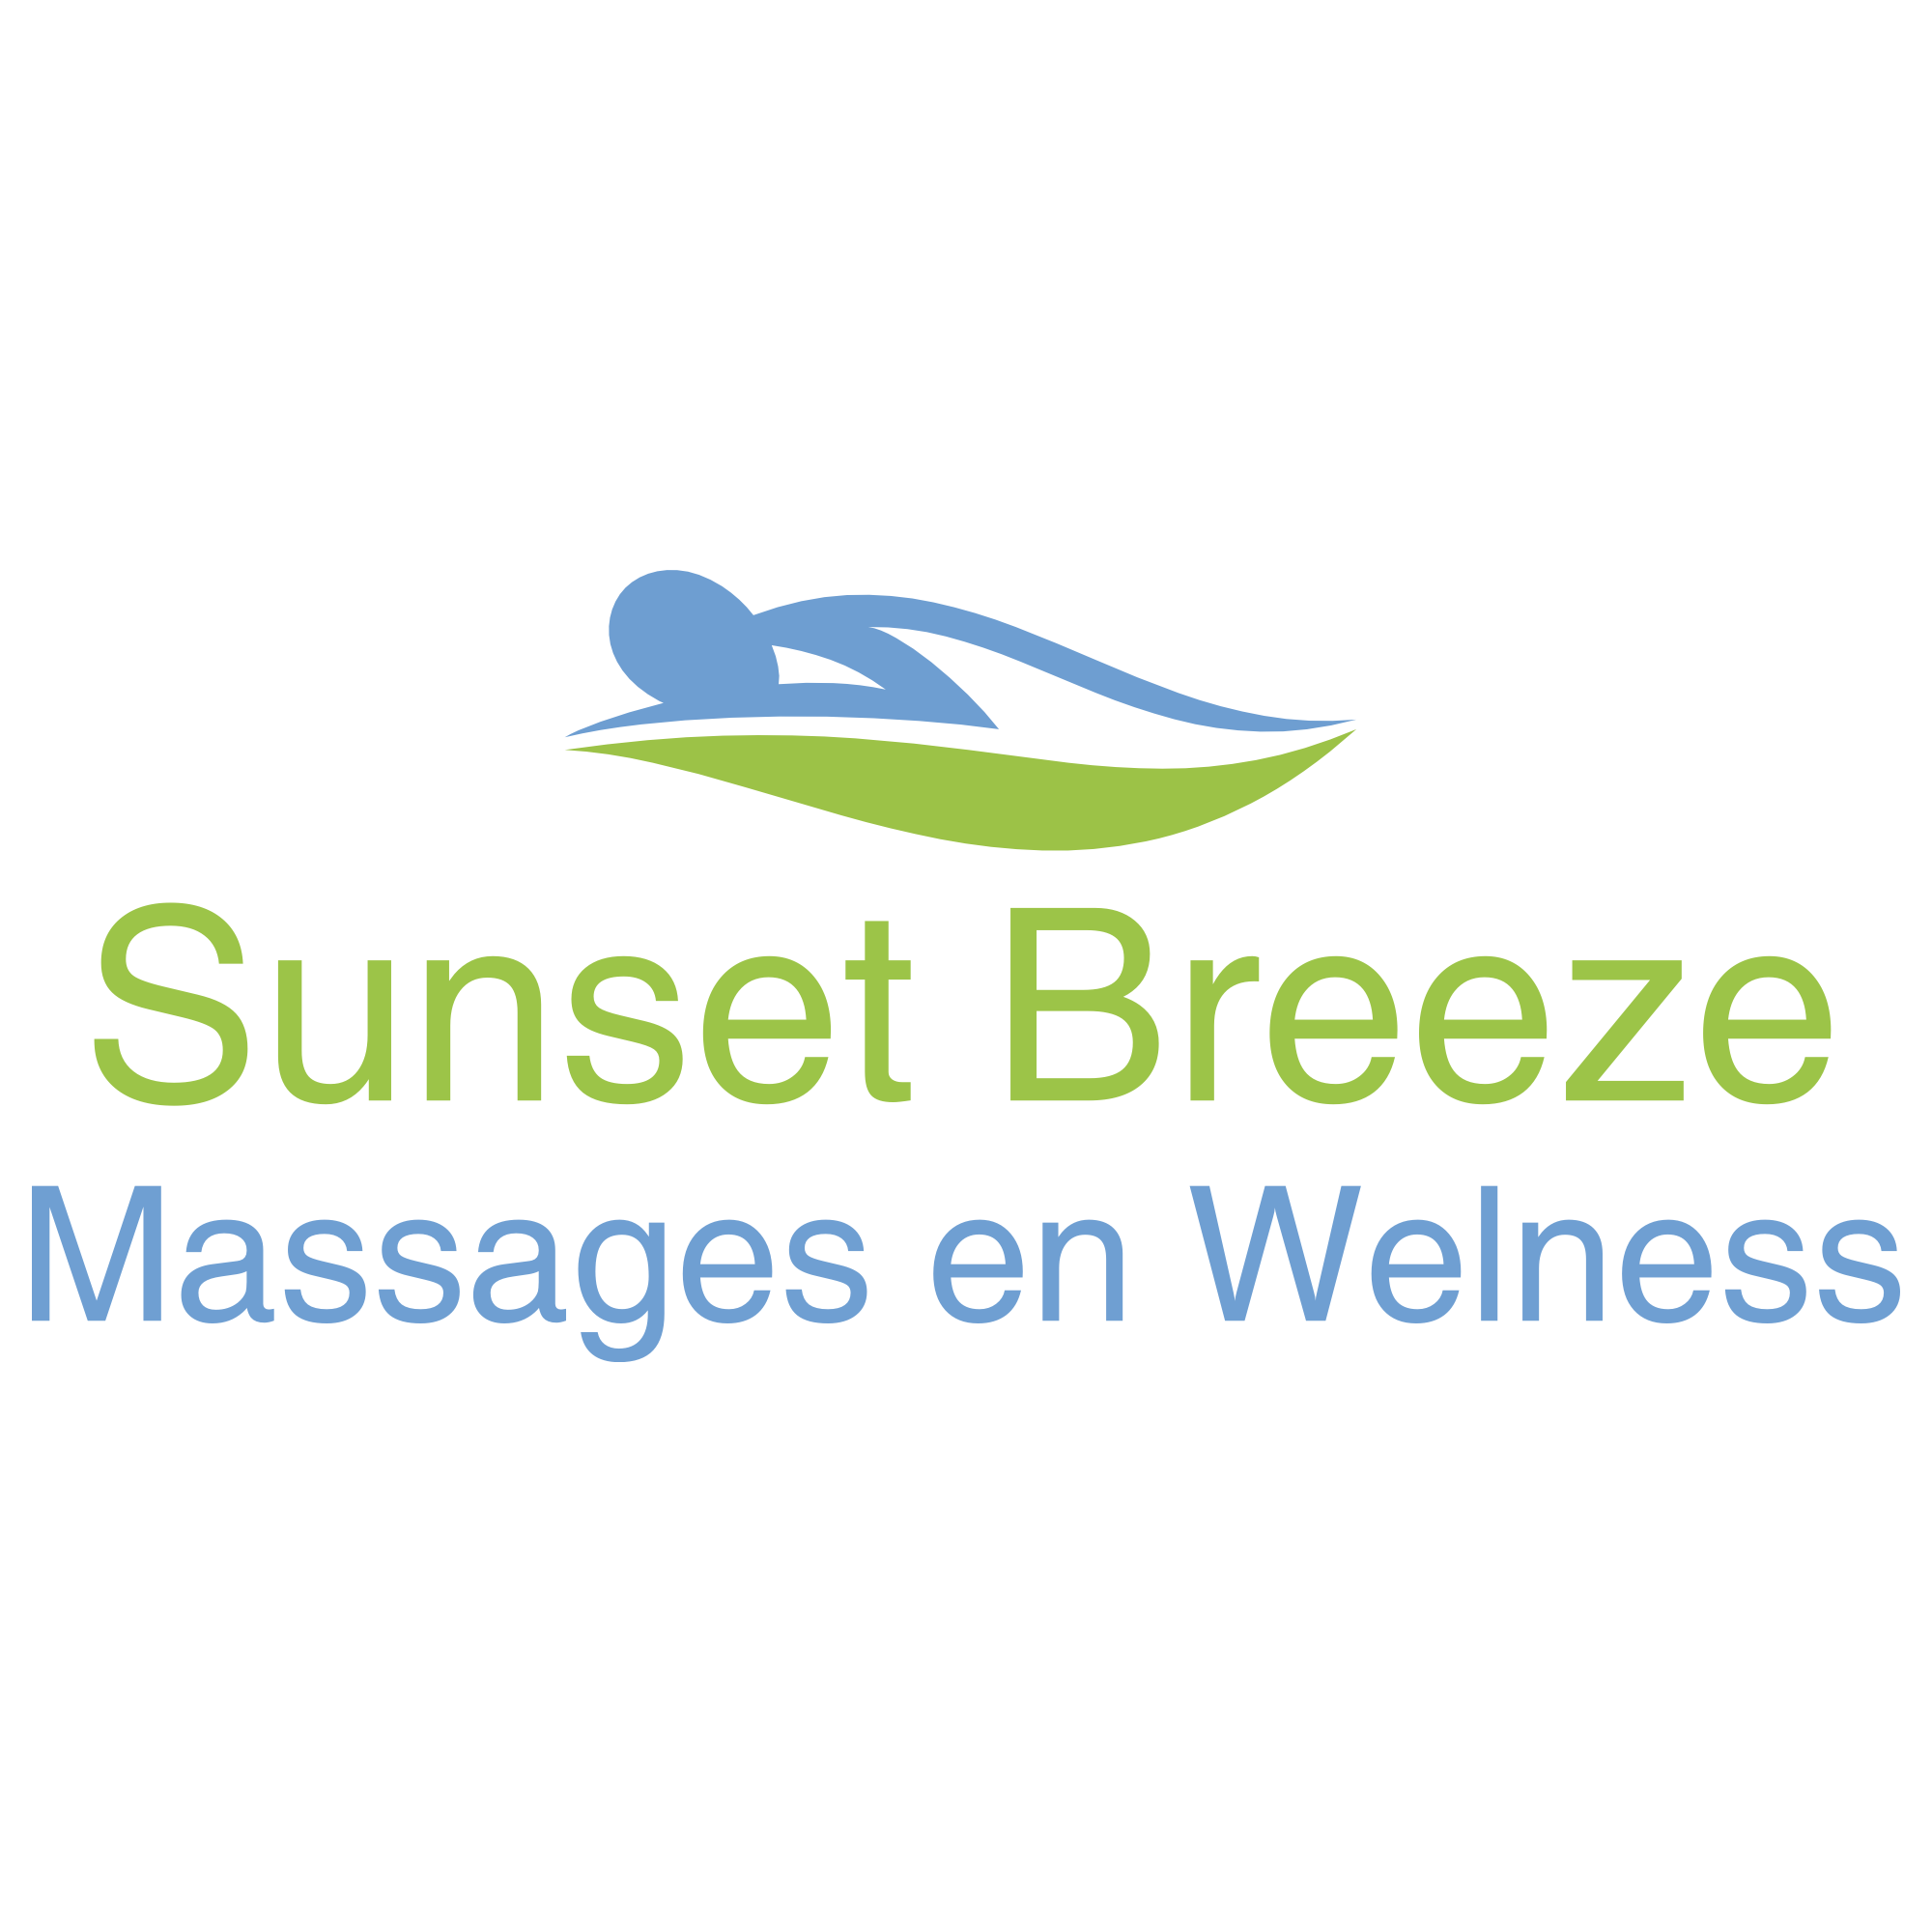 Sunset Breeze logo